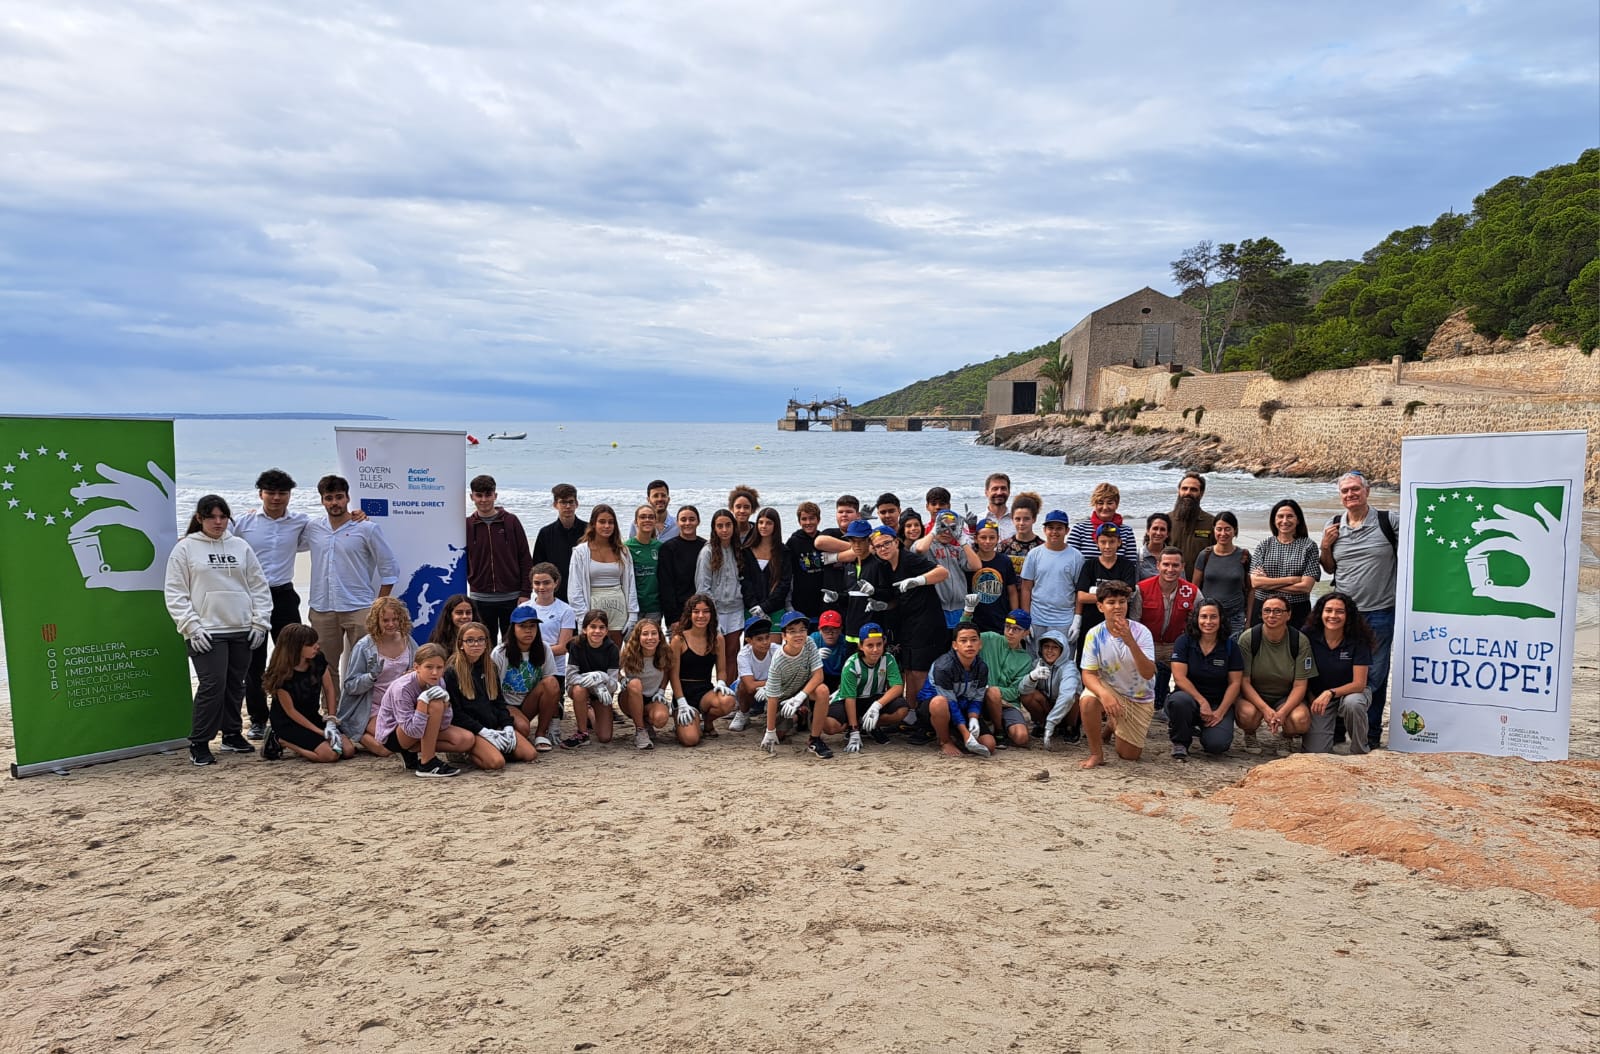 Alumnes d'Eivissa, en una jornada de Let's Clean up Europe